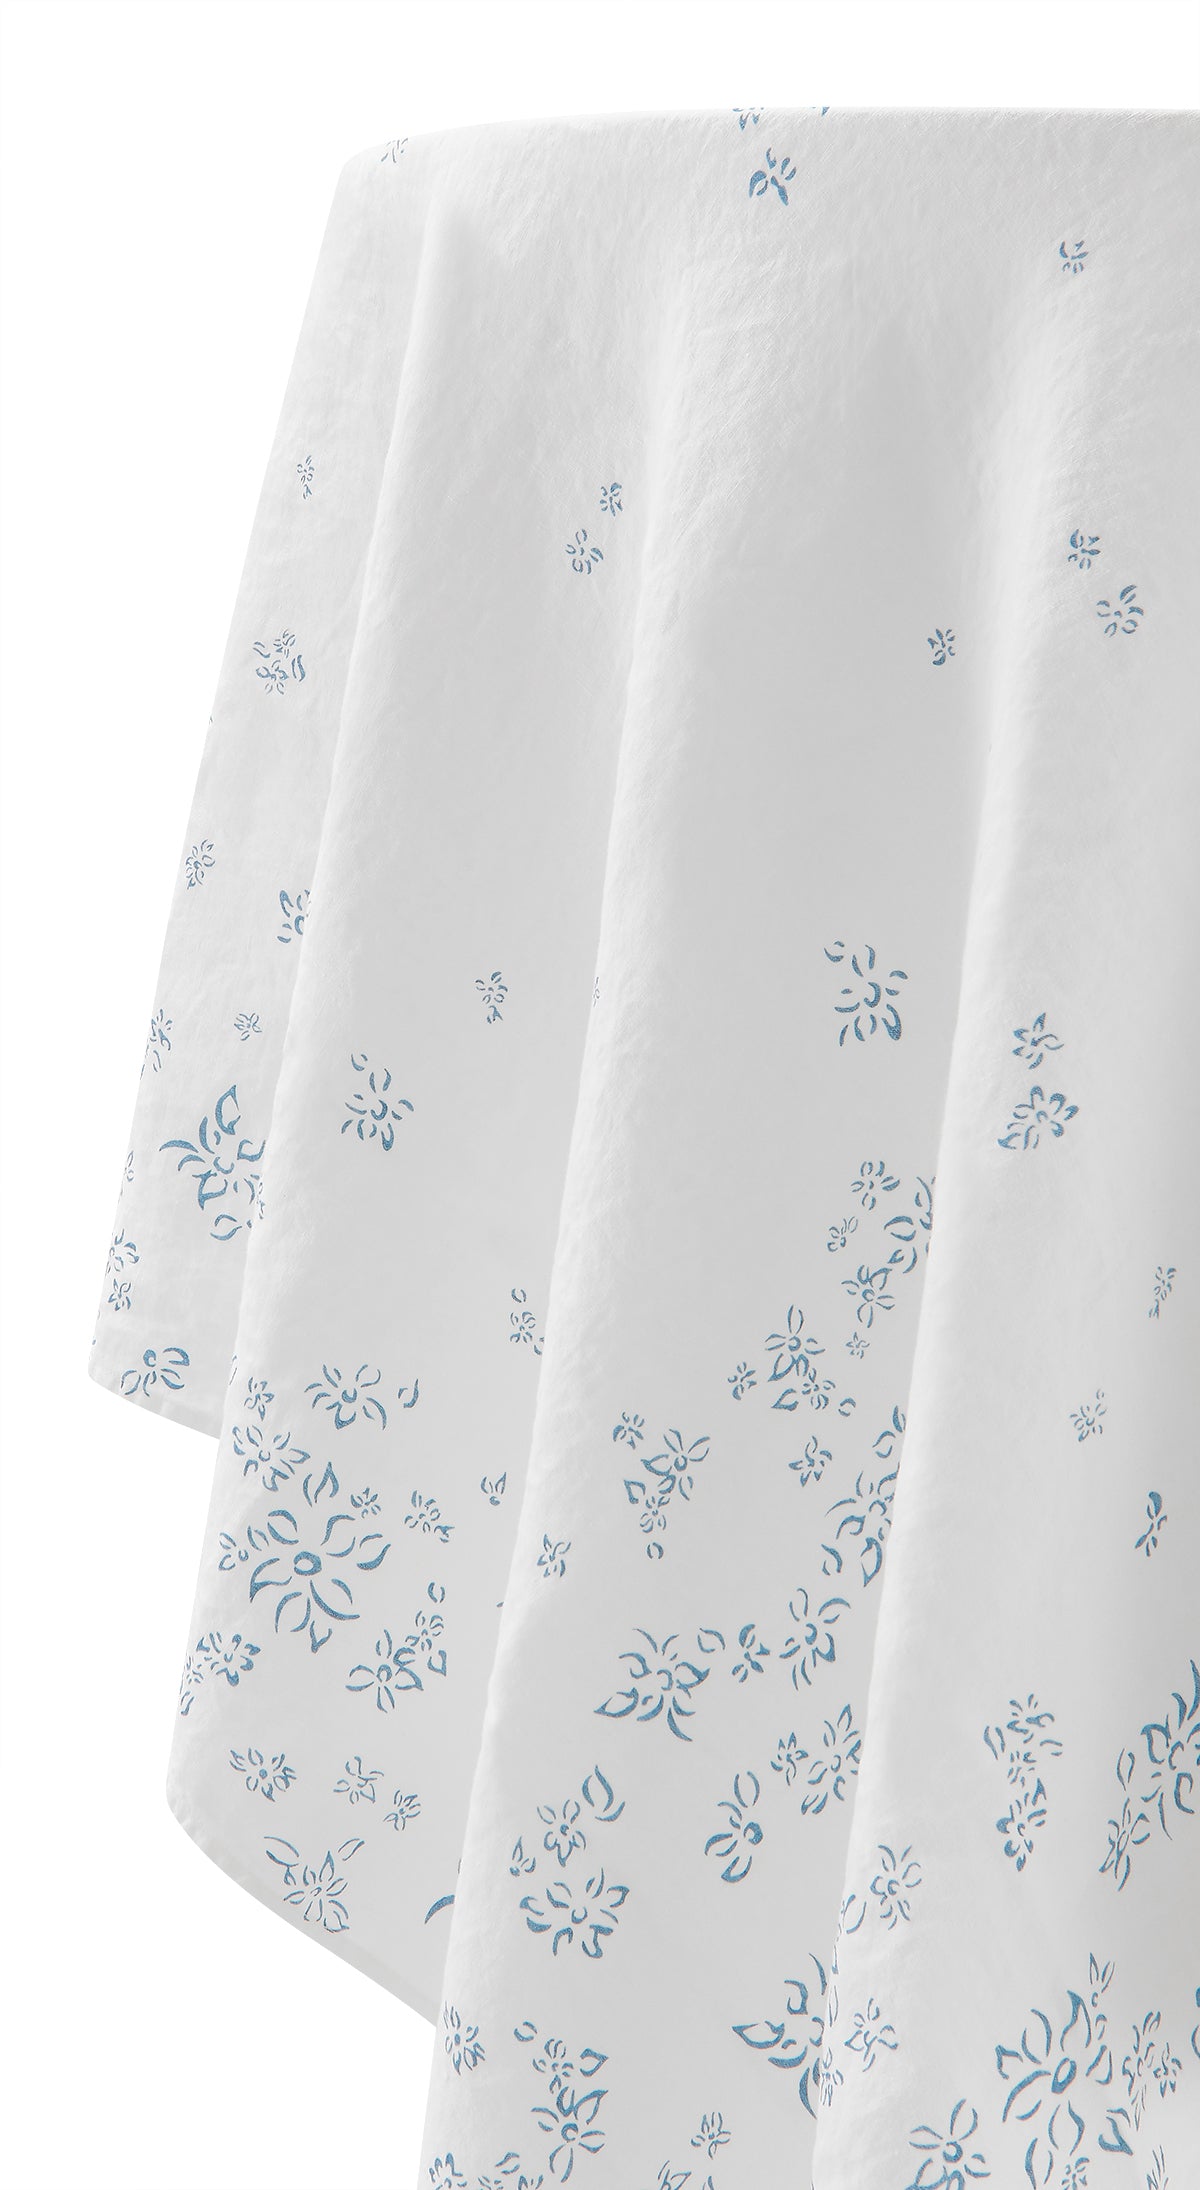 Bernadette's Falling Flower Square Linen Tablecloth in Light Blue, 200cm x 200cm